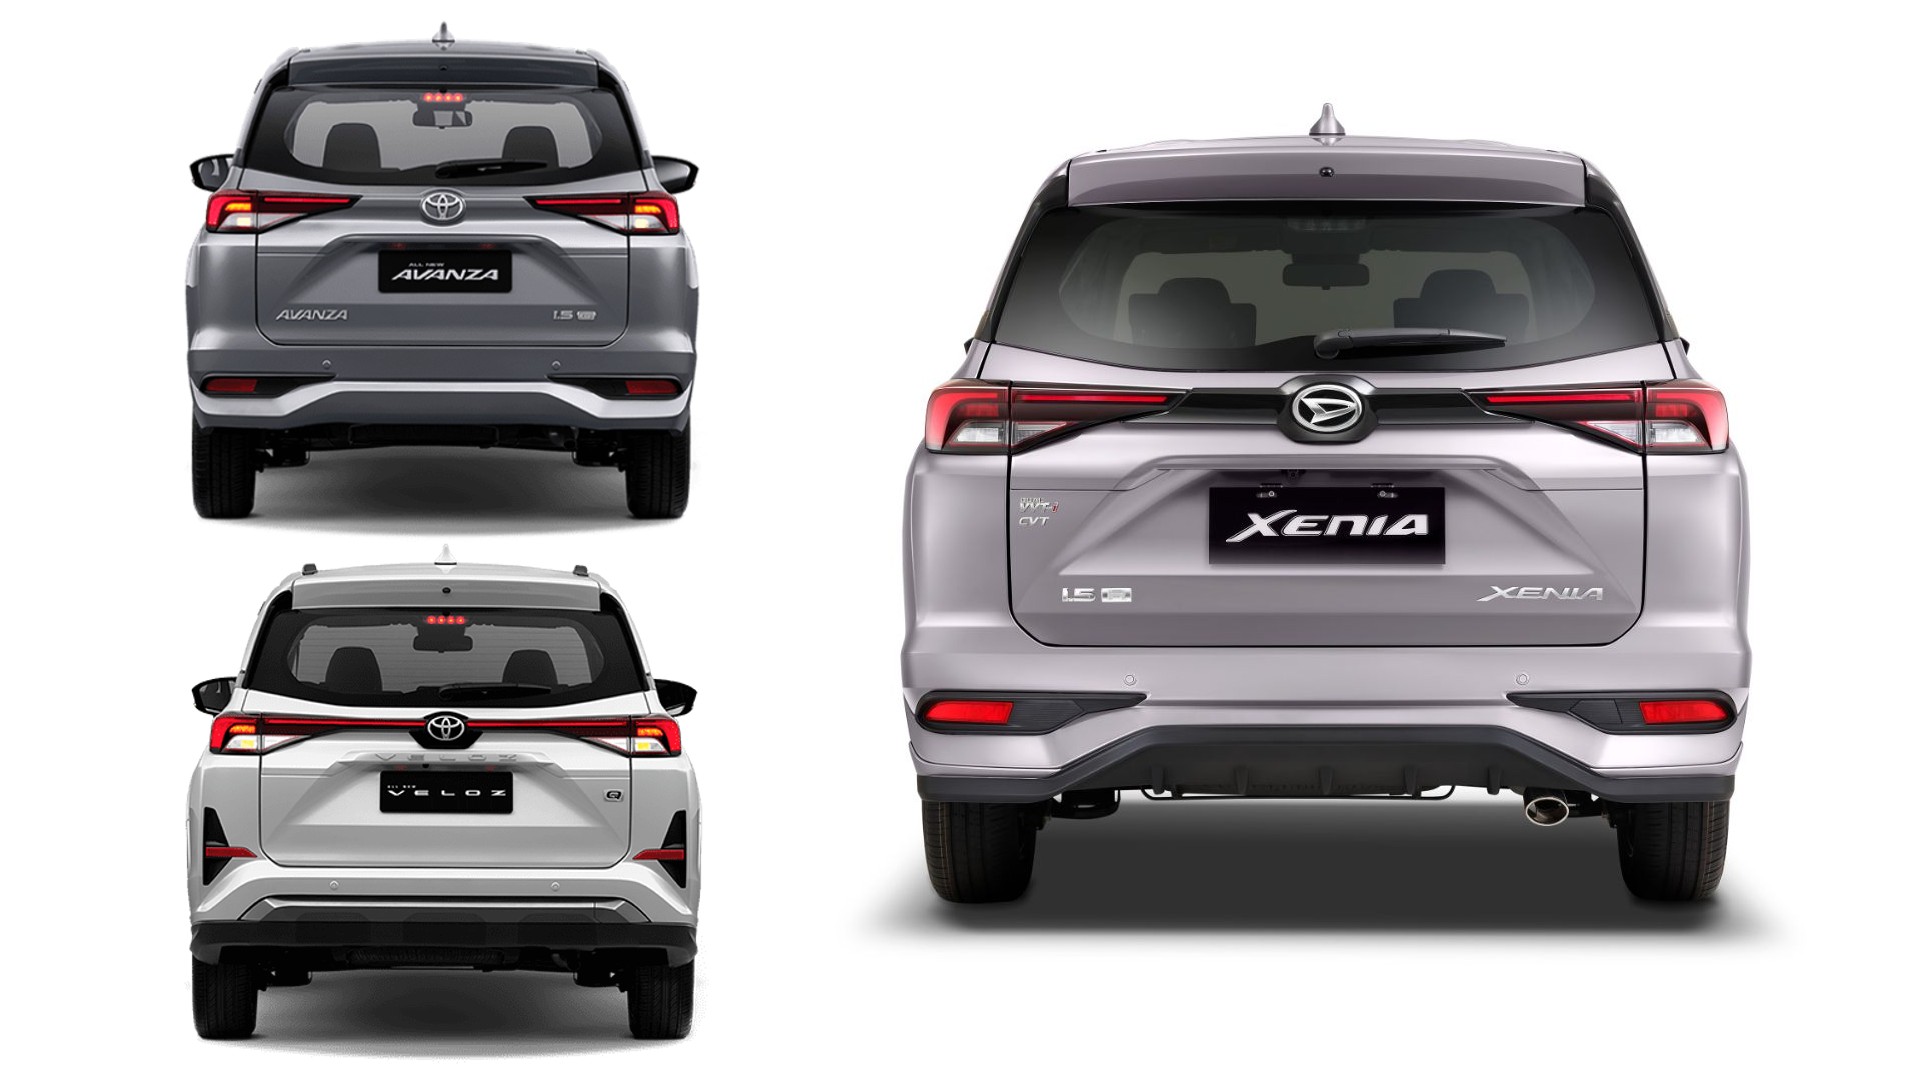 Toyota Avanza Veloz And Daihatsu Xenia Mpv Siblings Unveiled In